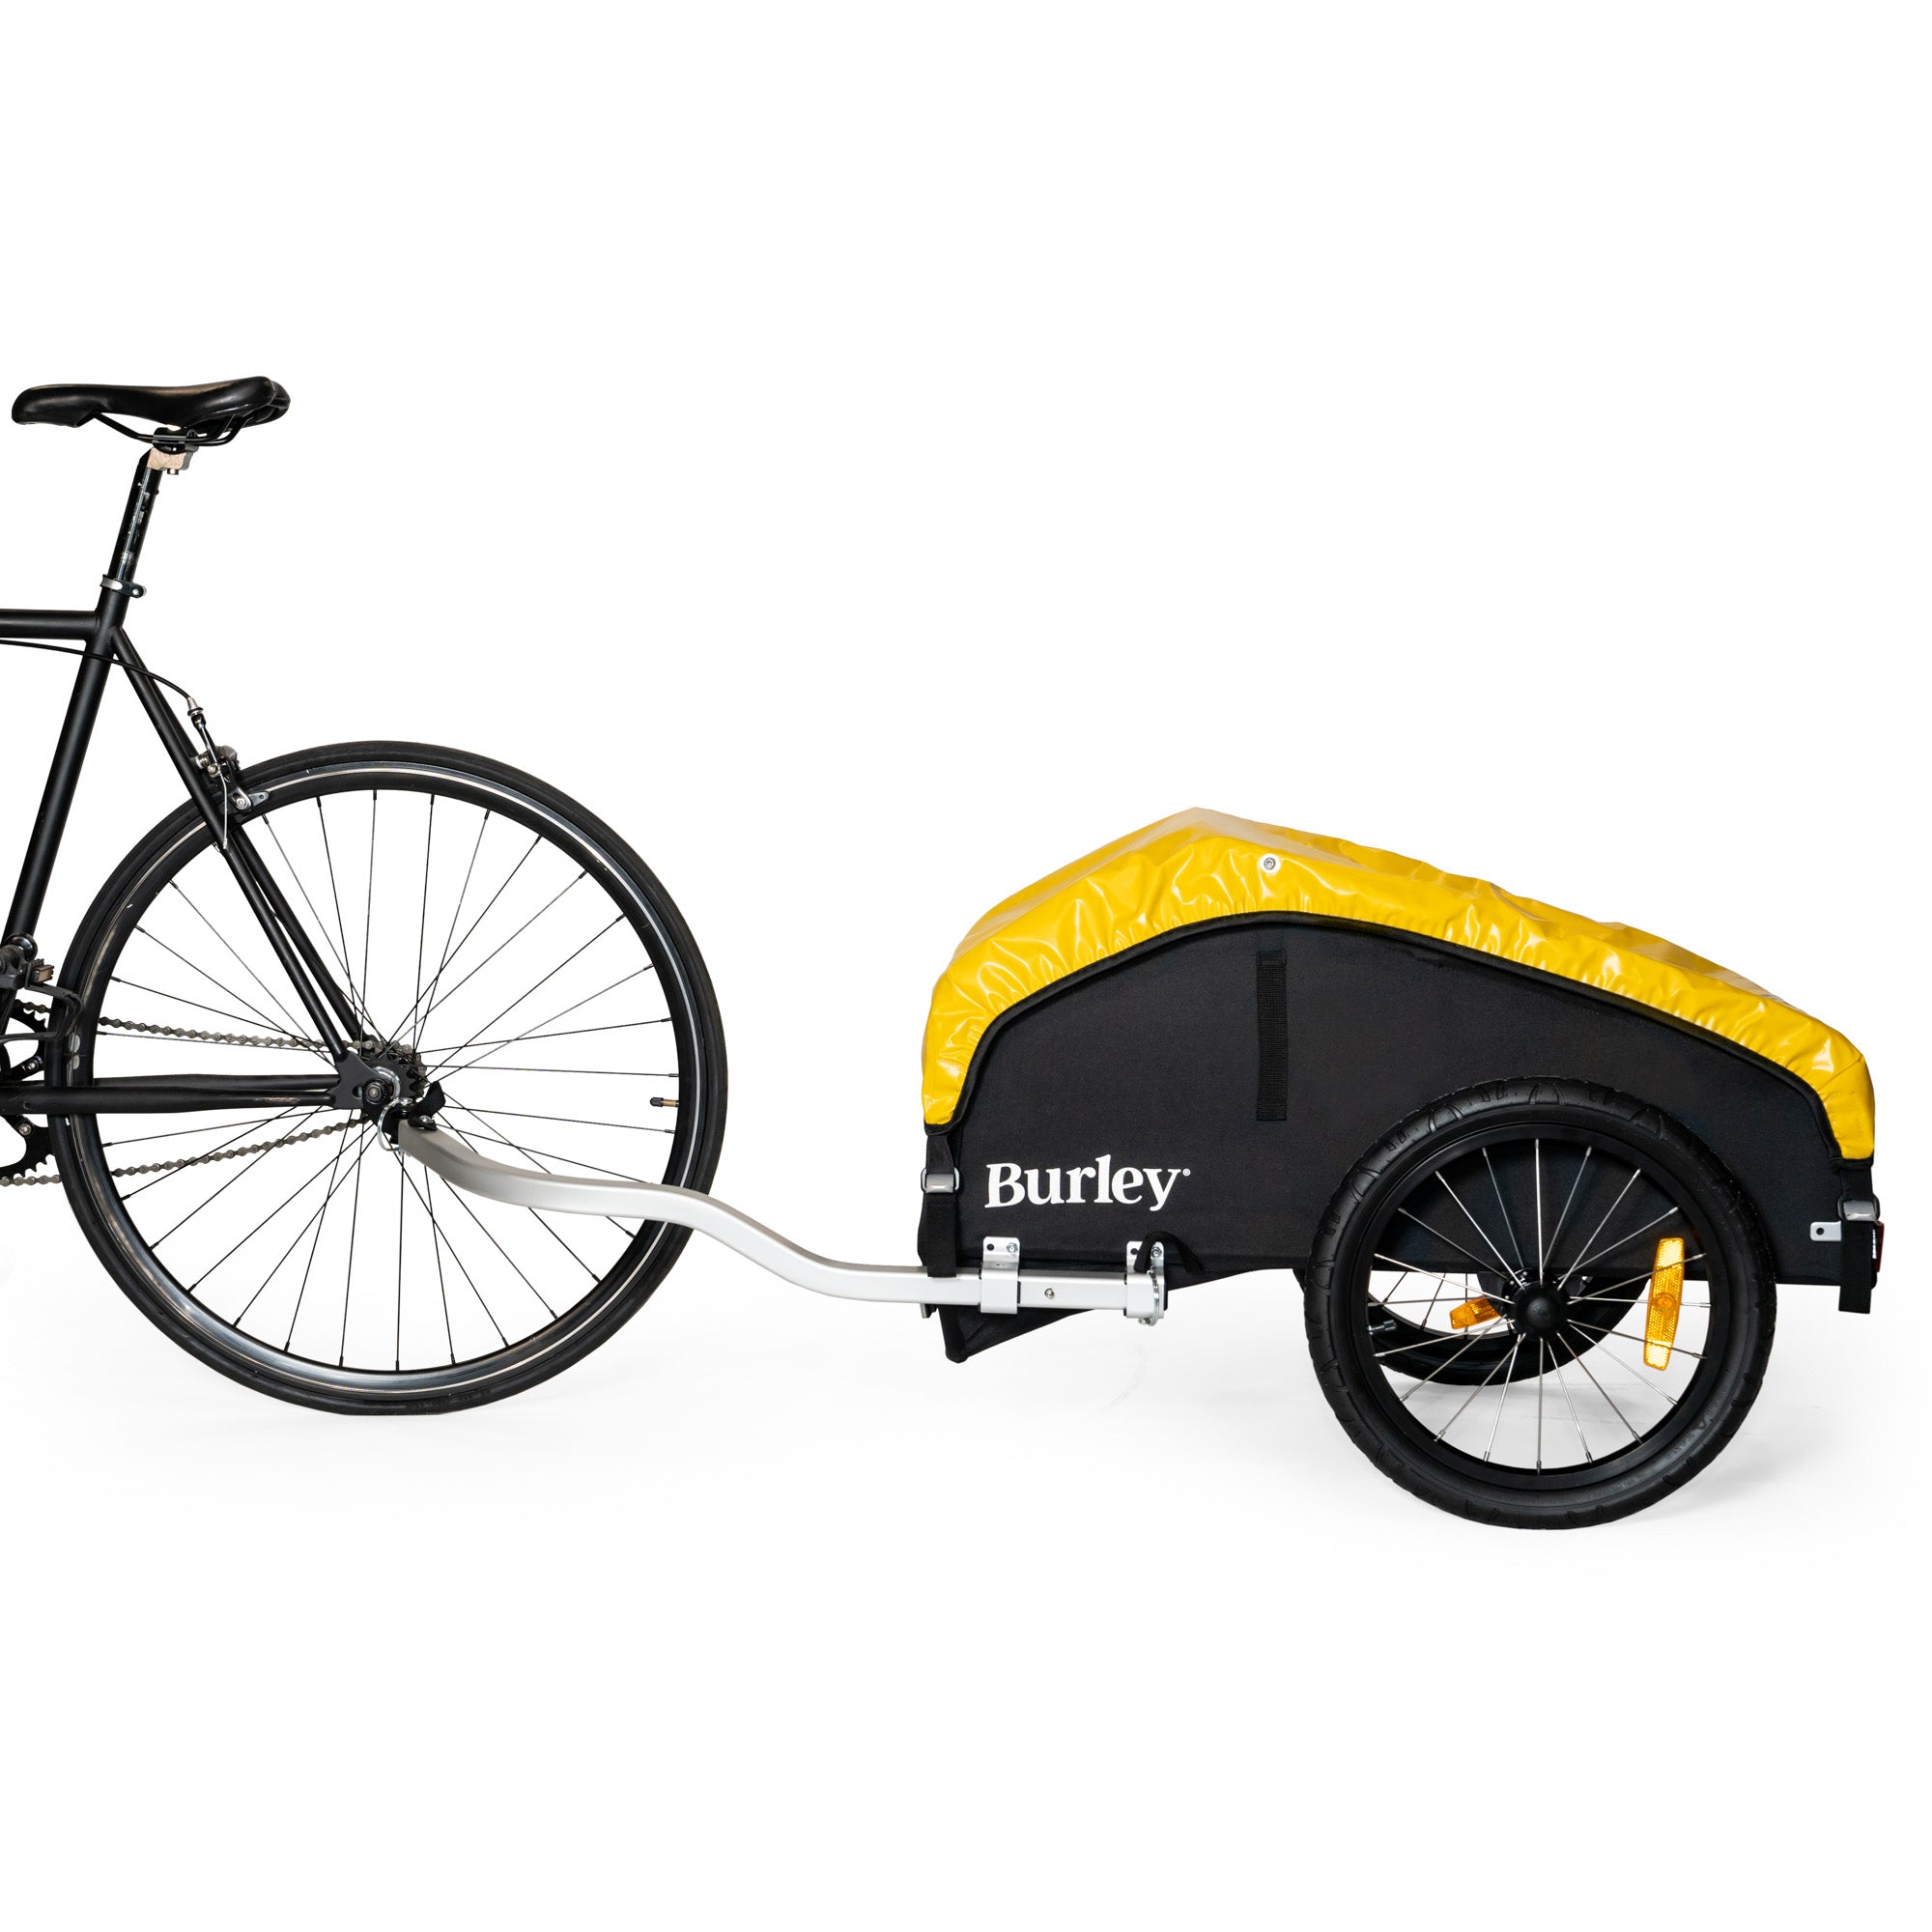 GIST Compact Bicycle Saddle Bag with Strap - Black/Yellow